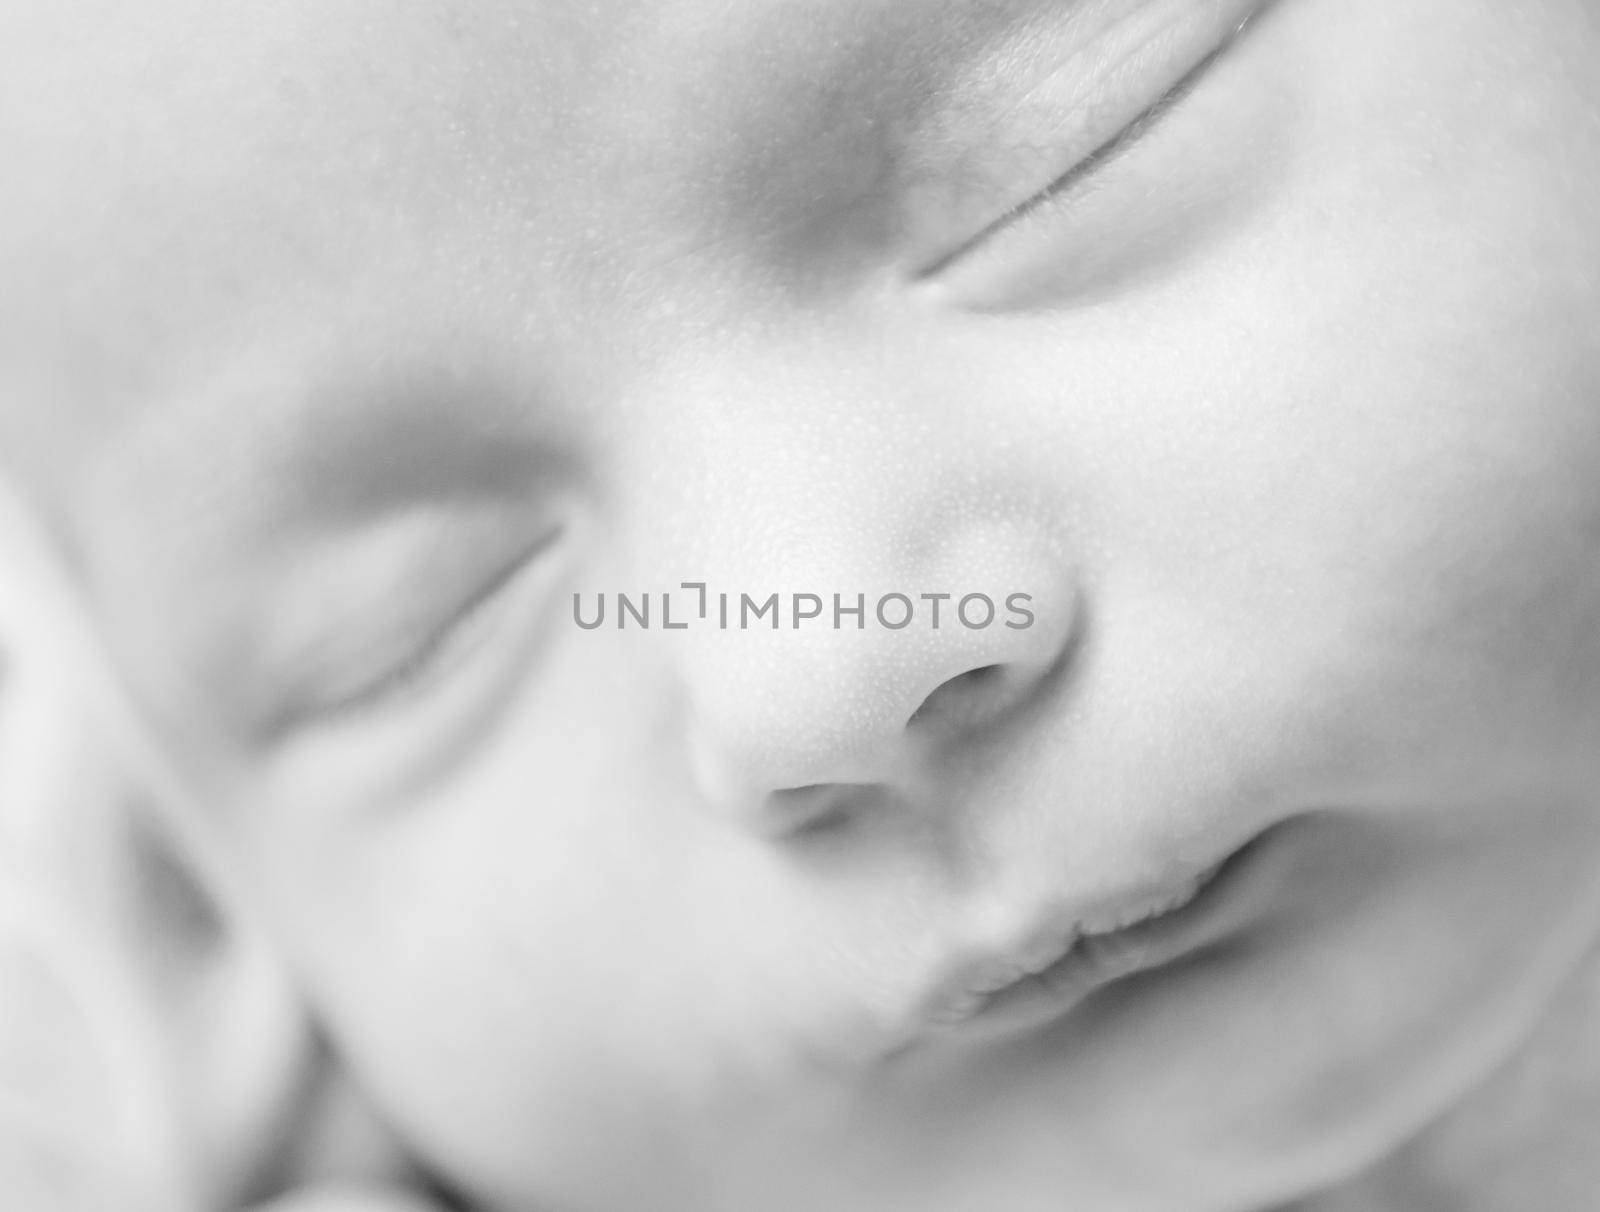 Portrait of newborn baby sleeping, close-up by tan4ikk1